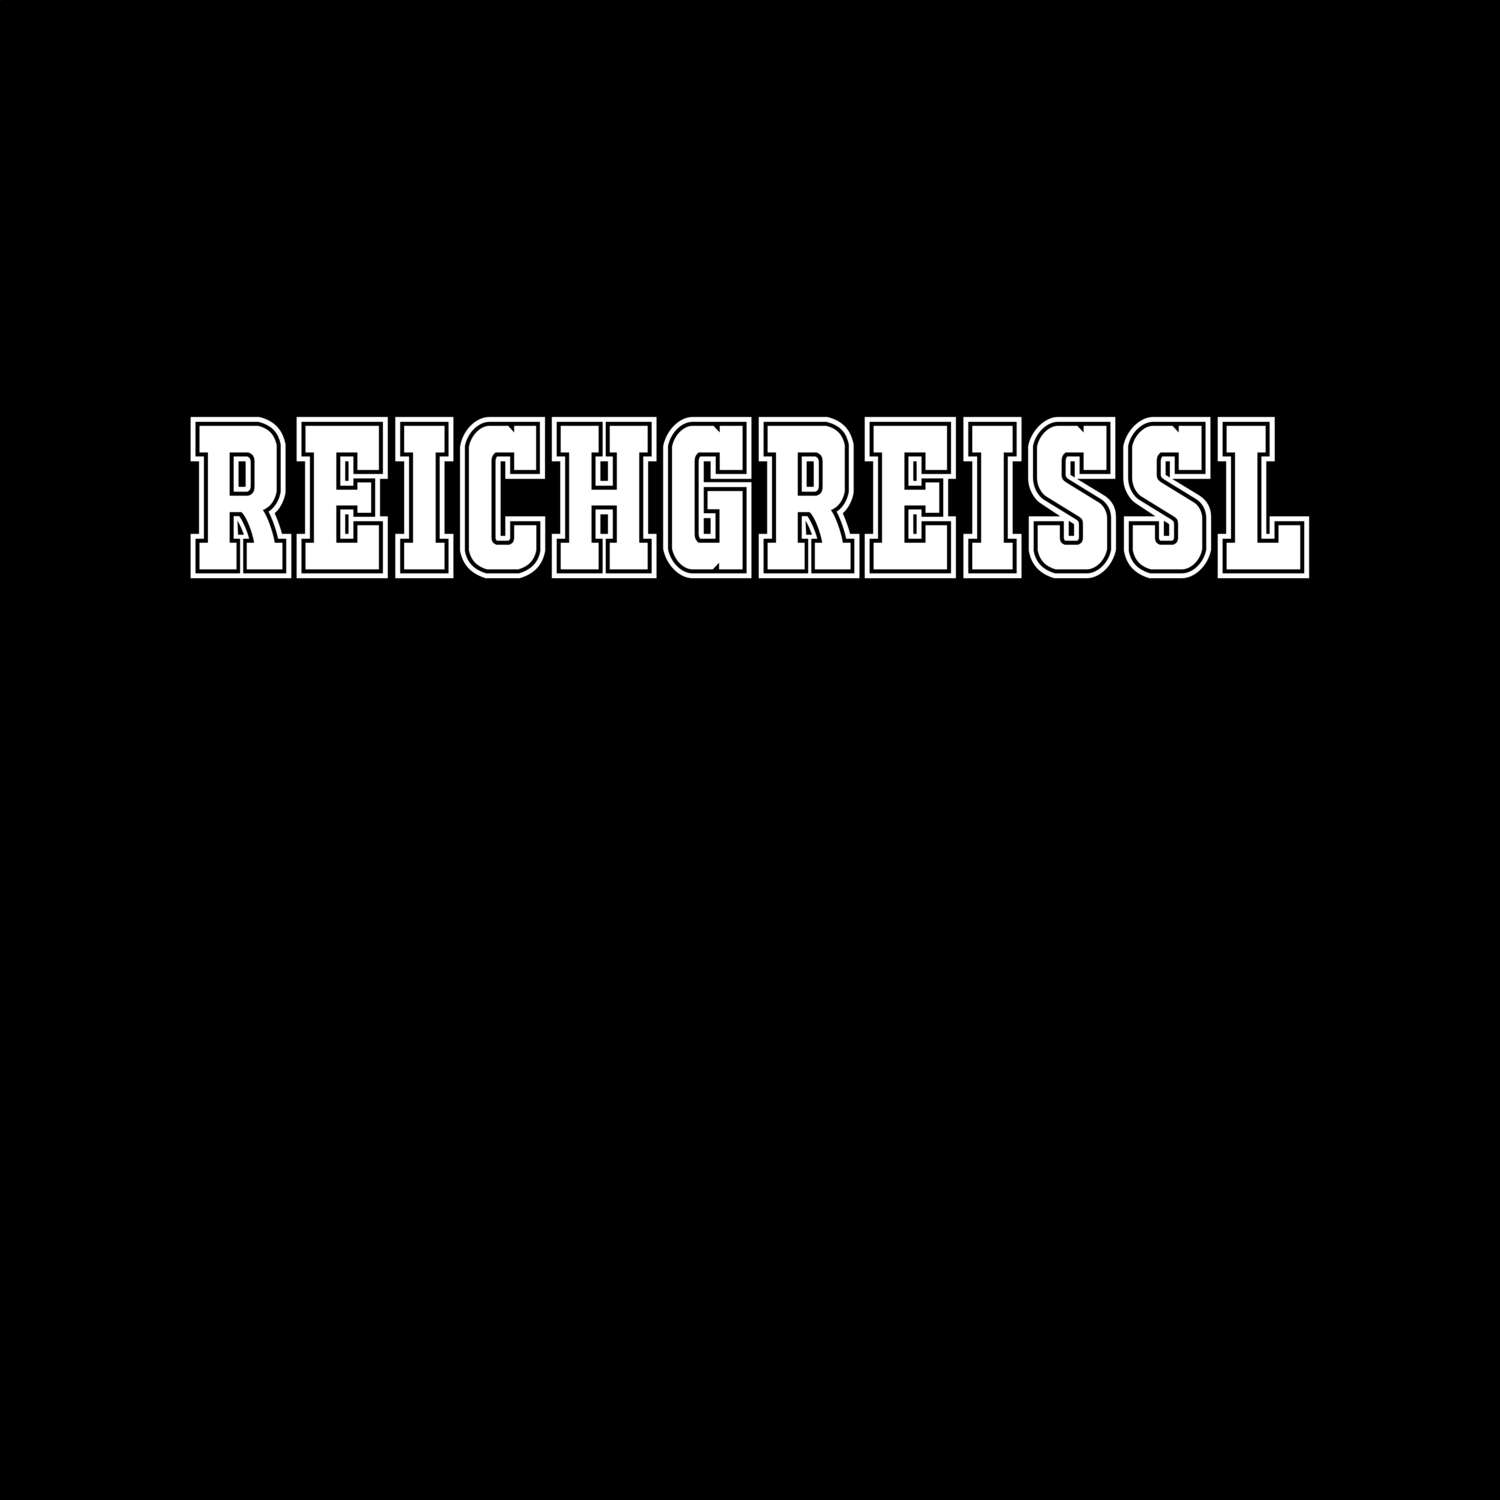 Reichgreißl T-Shirt »Classic«